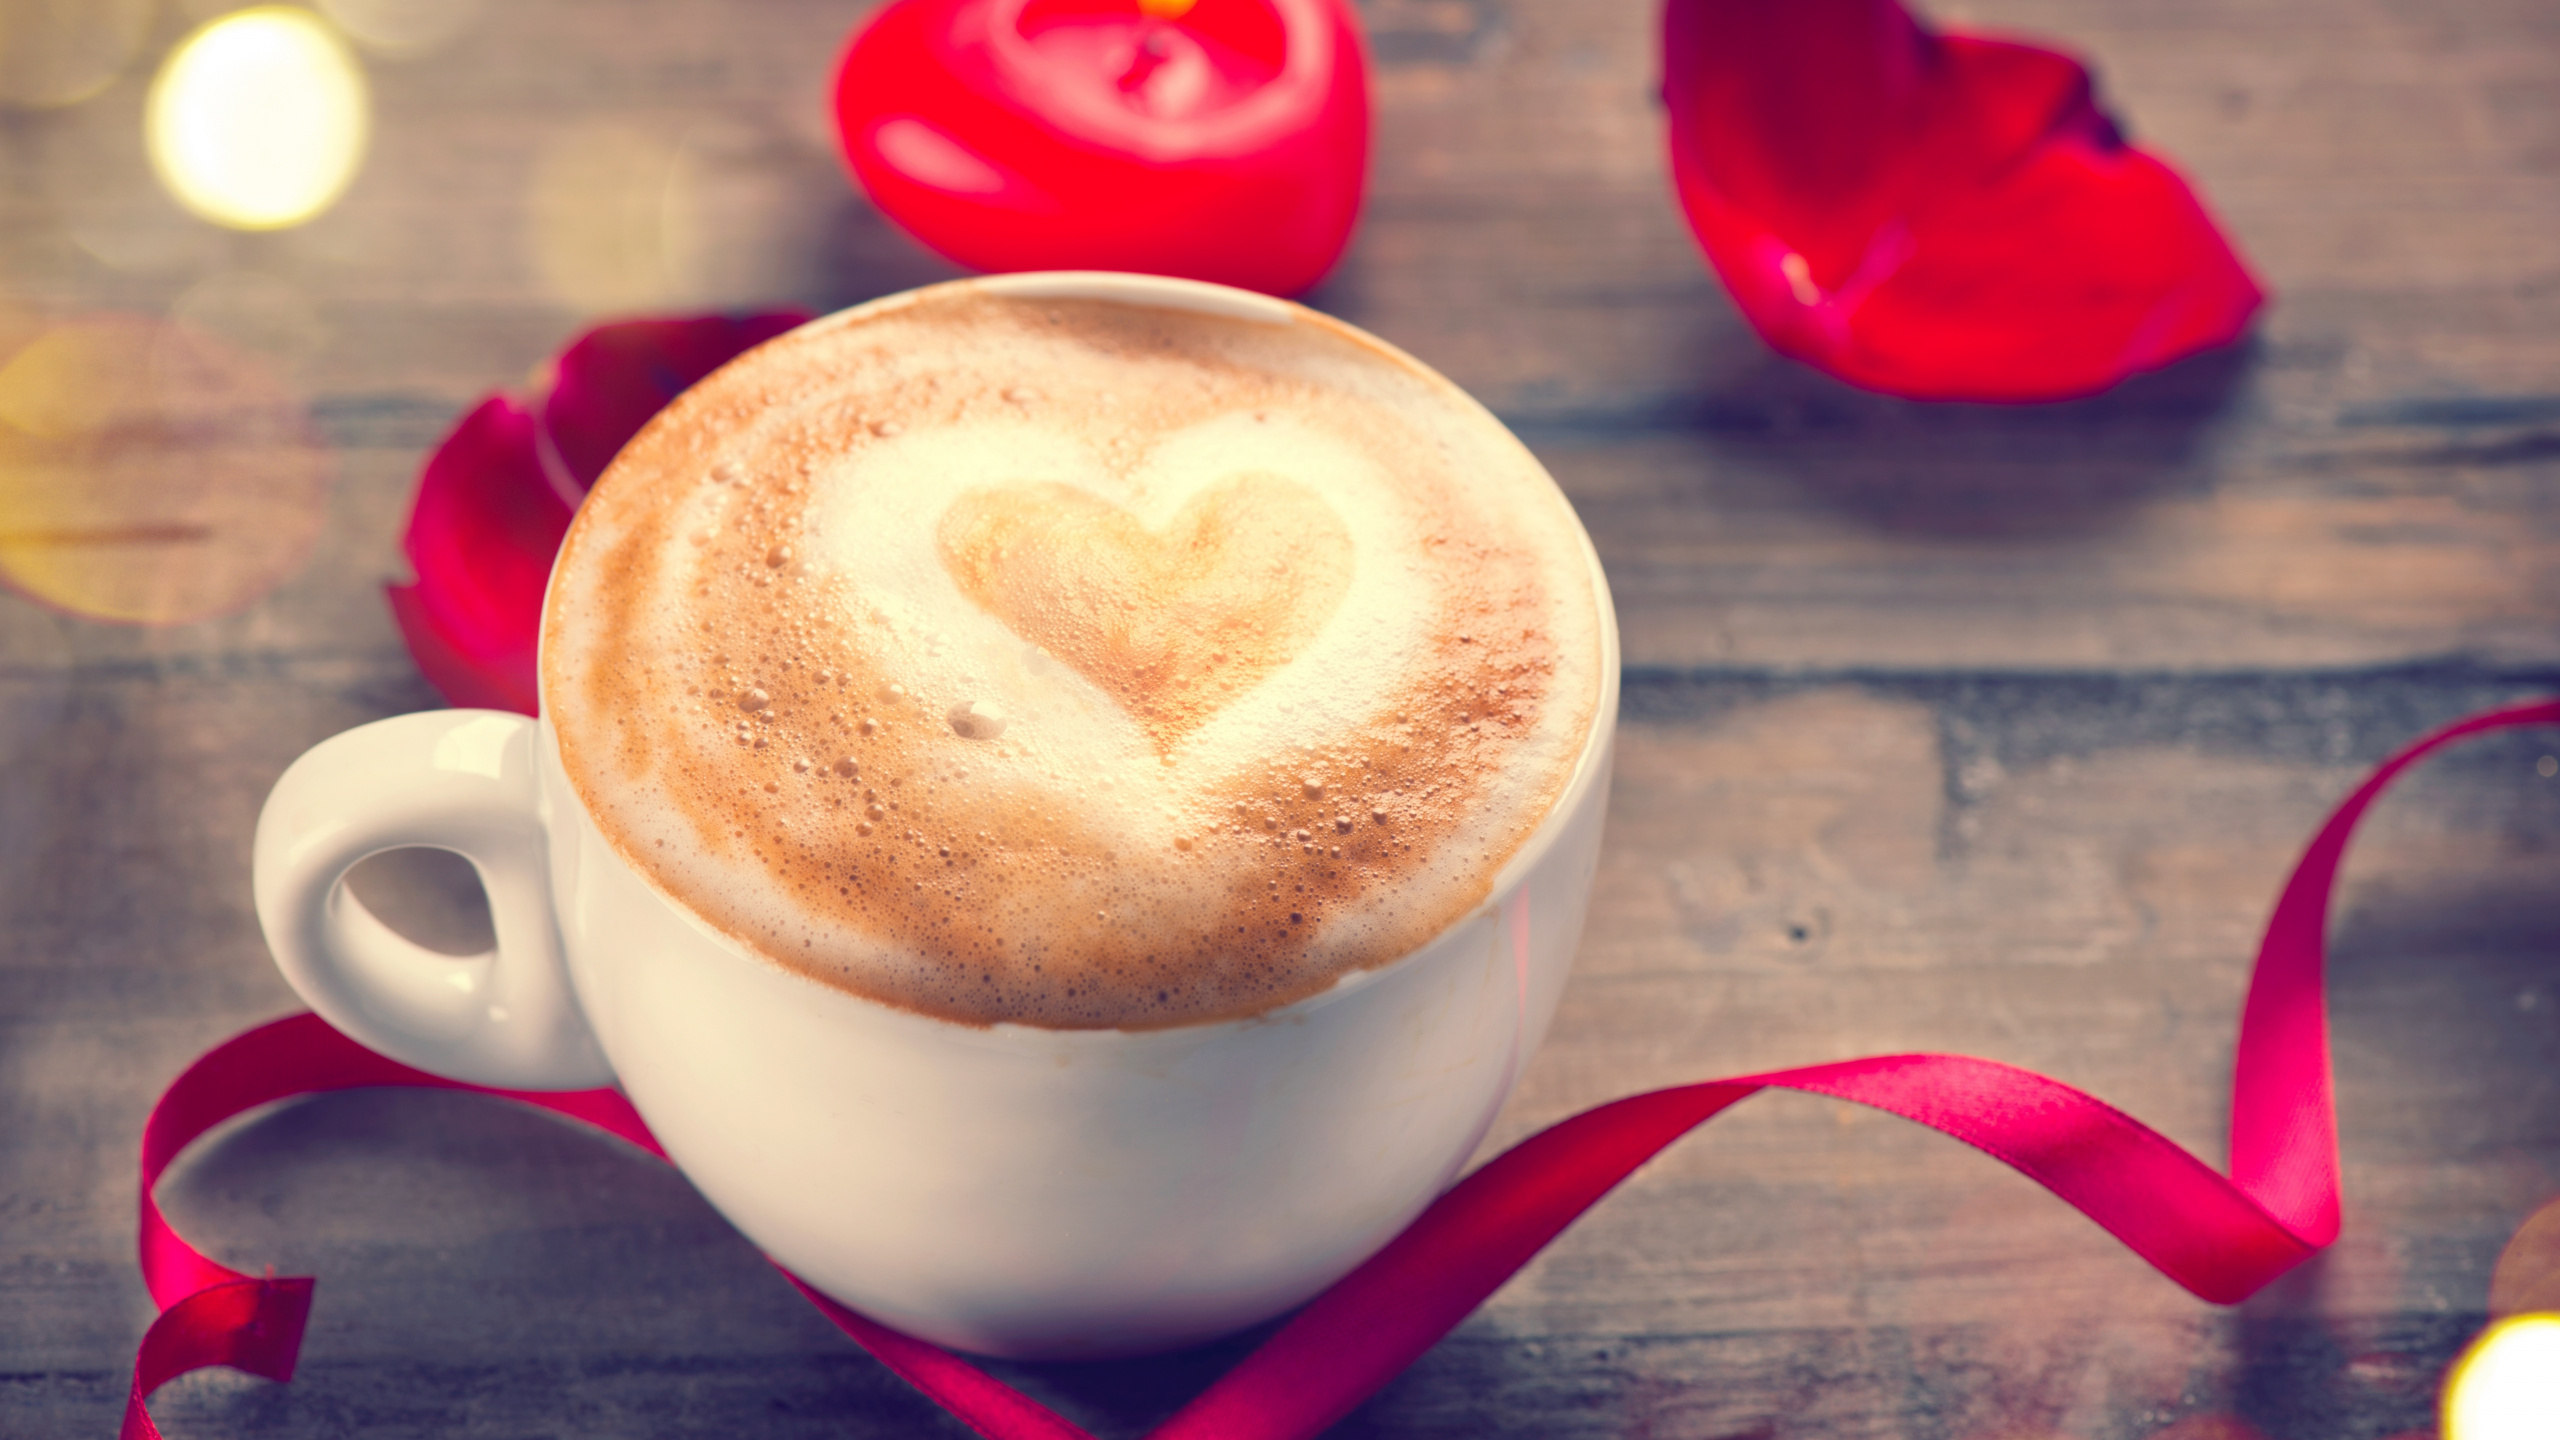 Kaffee, Cappuccino, Latte, Kaffeetasse, Cup. Wallpaper in 2560x1440 Resolution